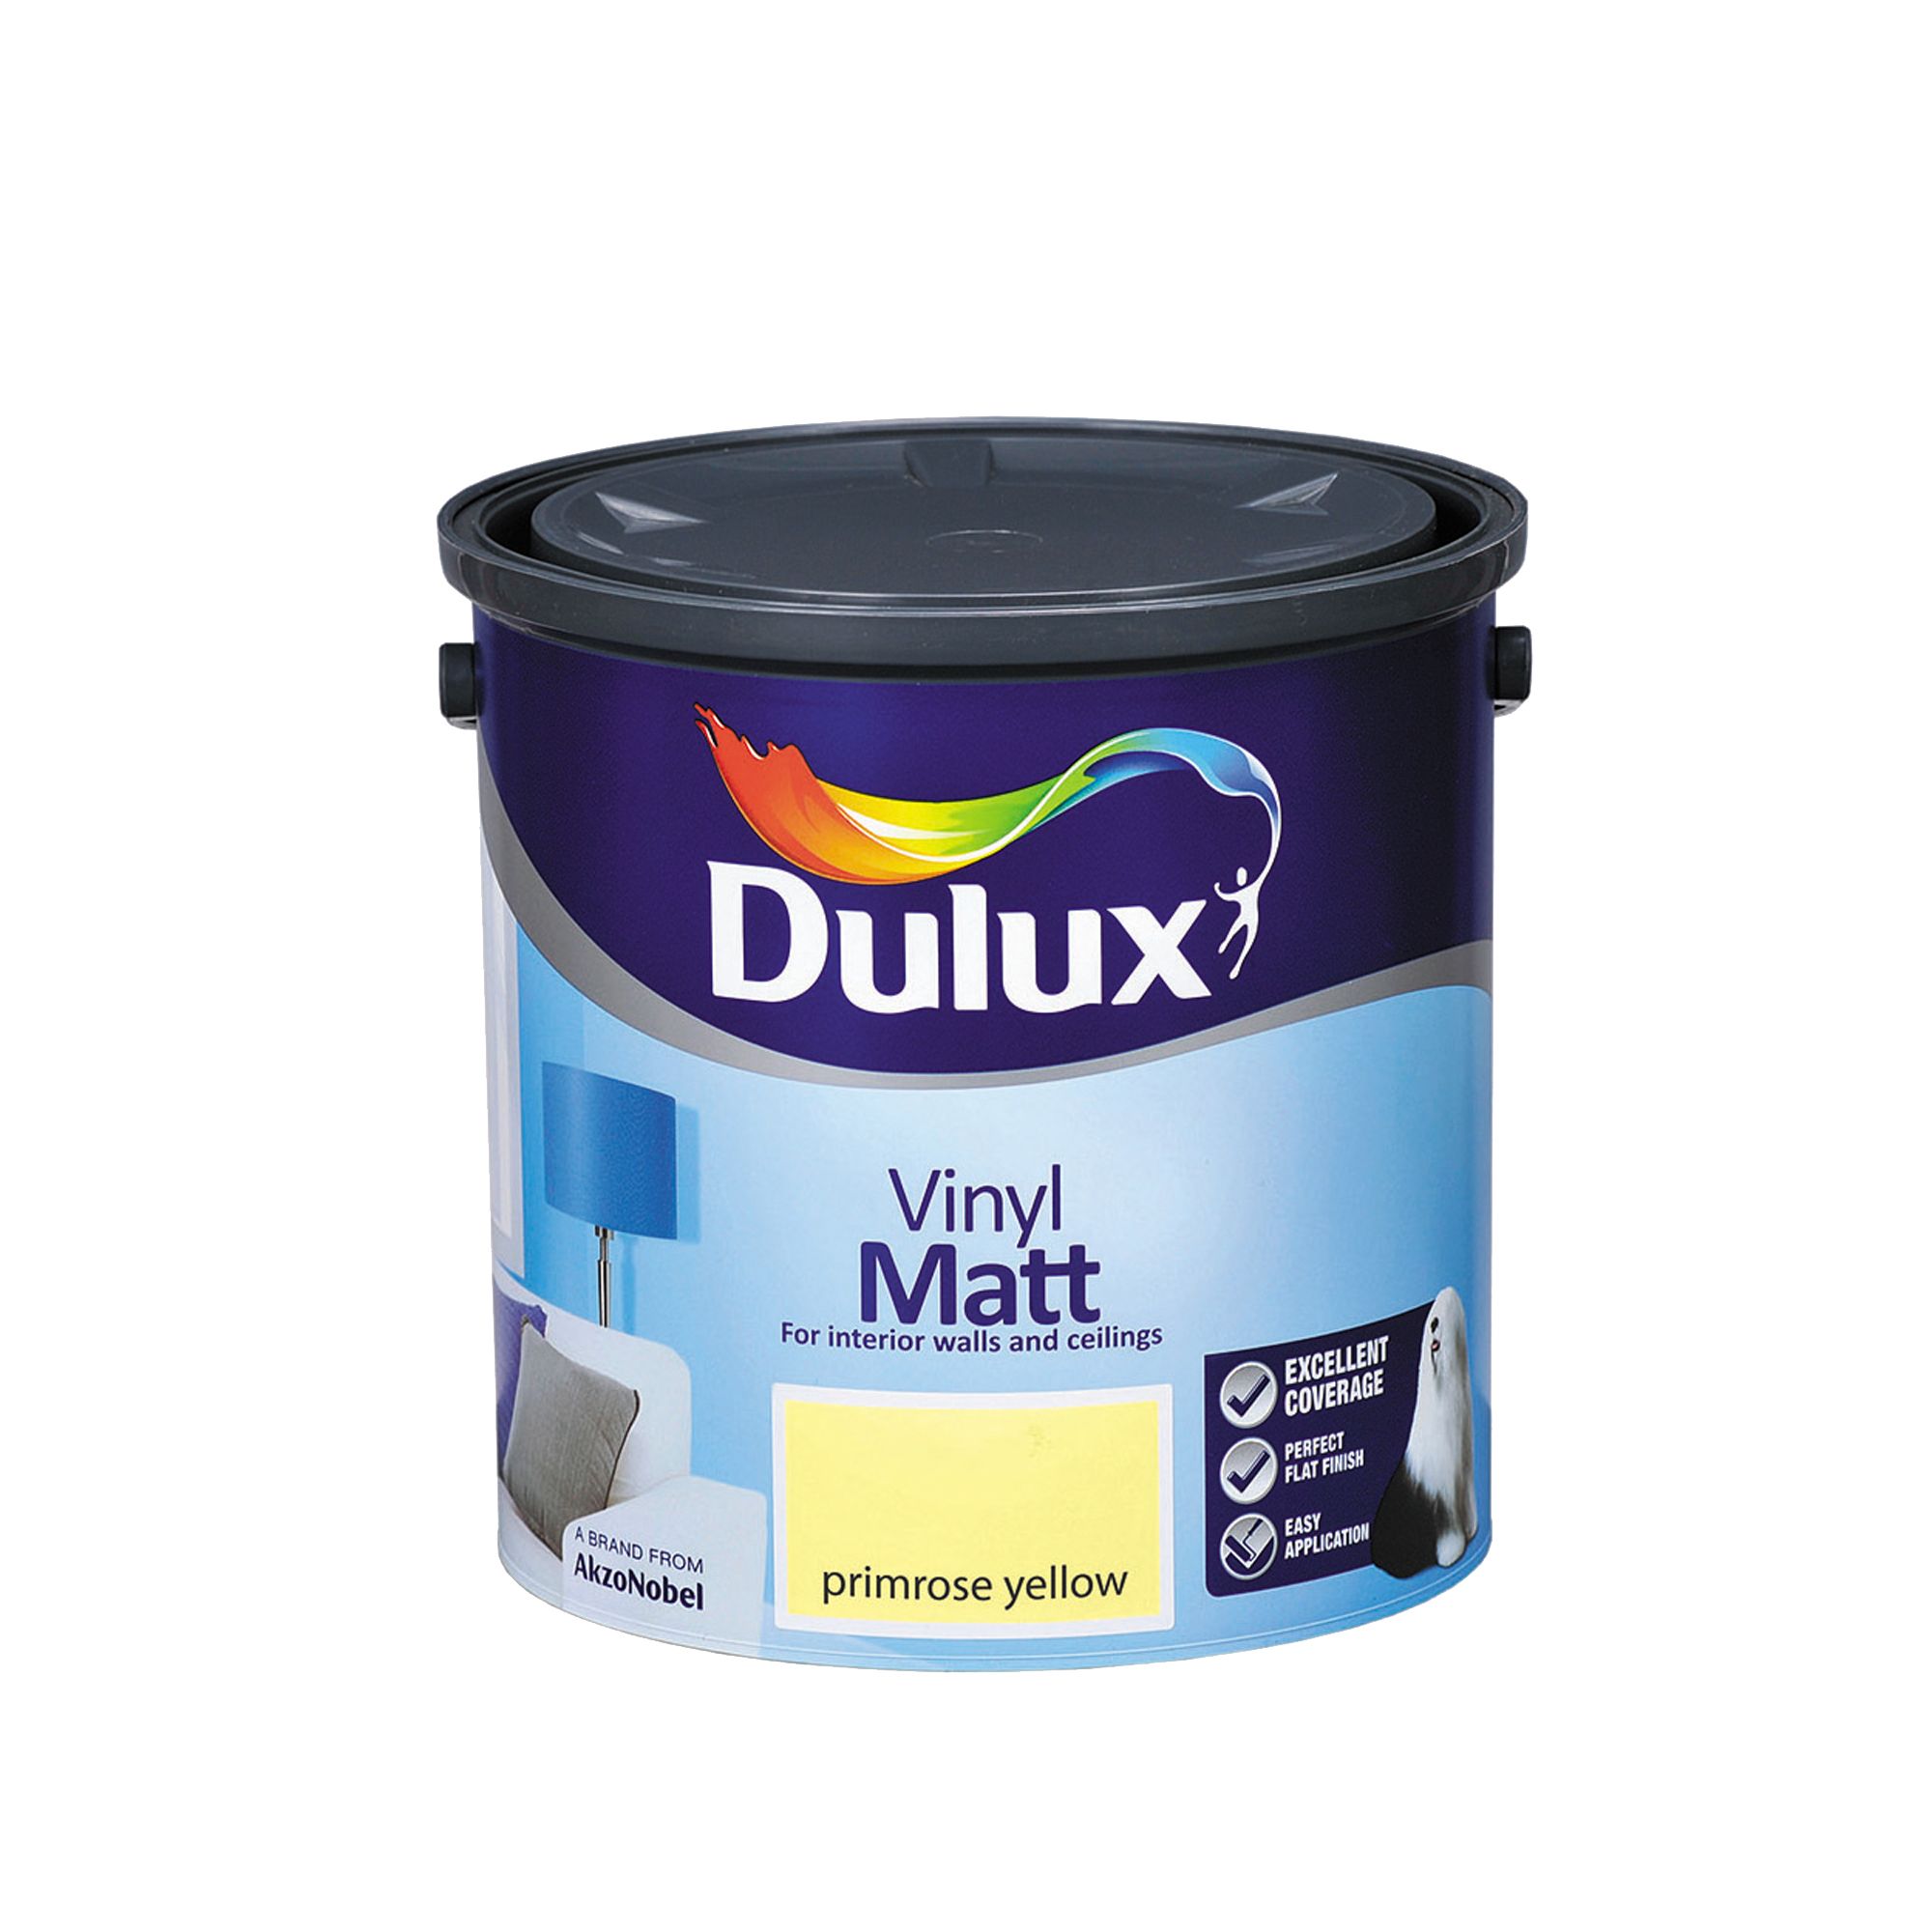 Dulux Primrose yellow Vinyl matt Emulsion paint, 2.5L